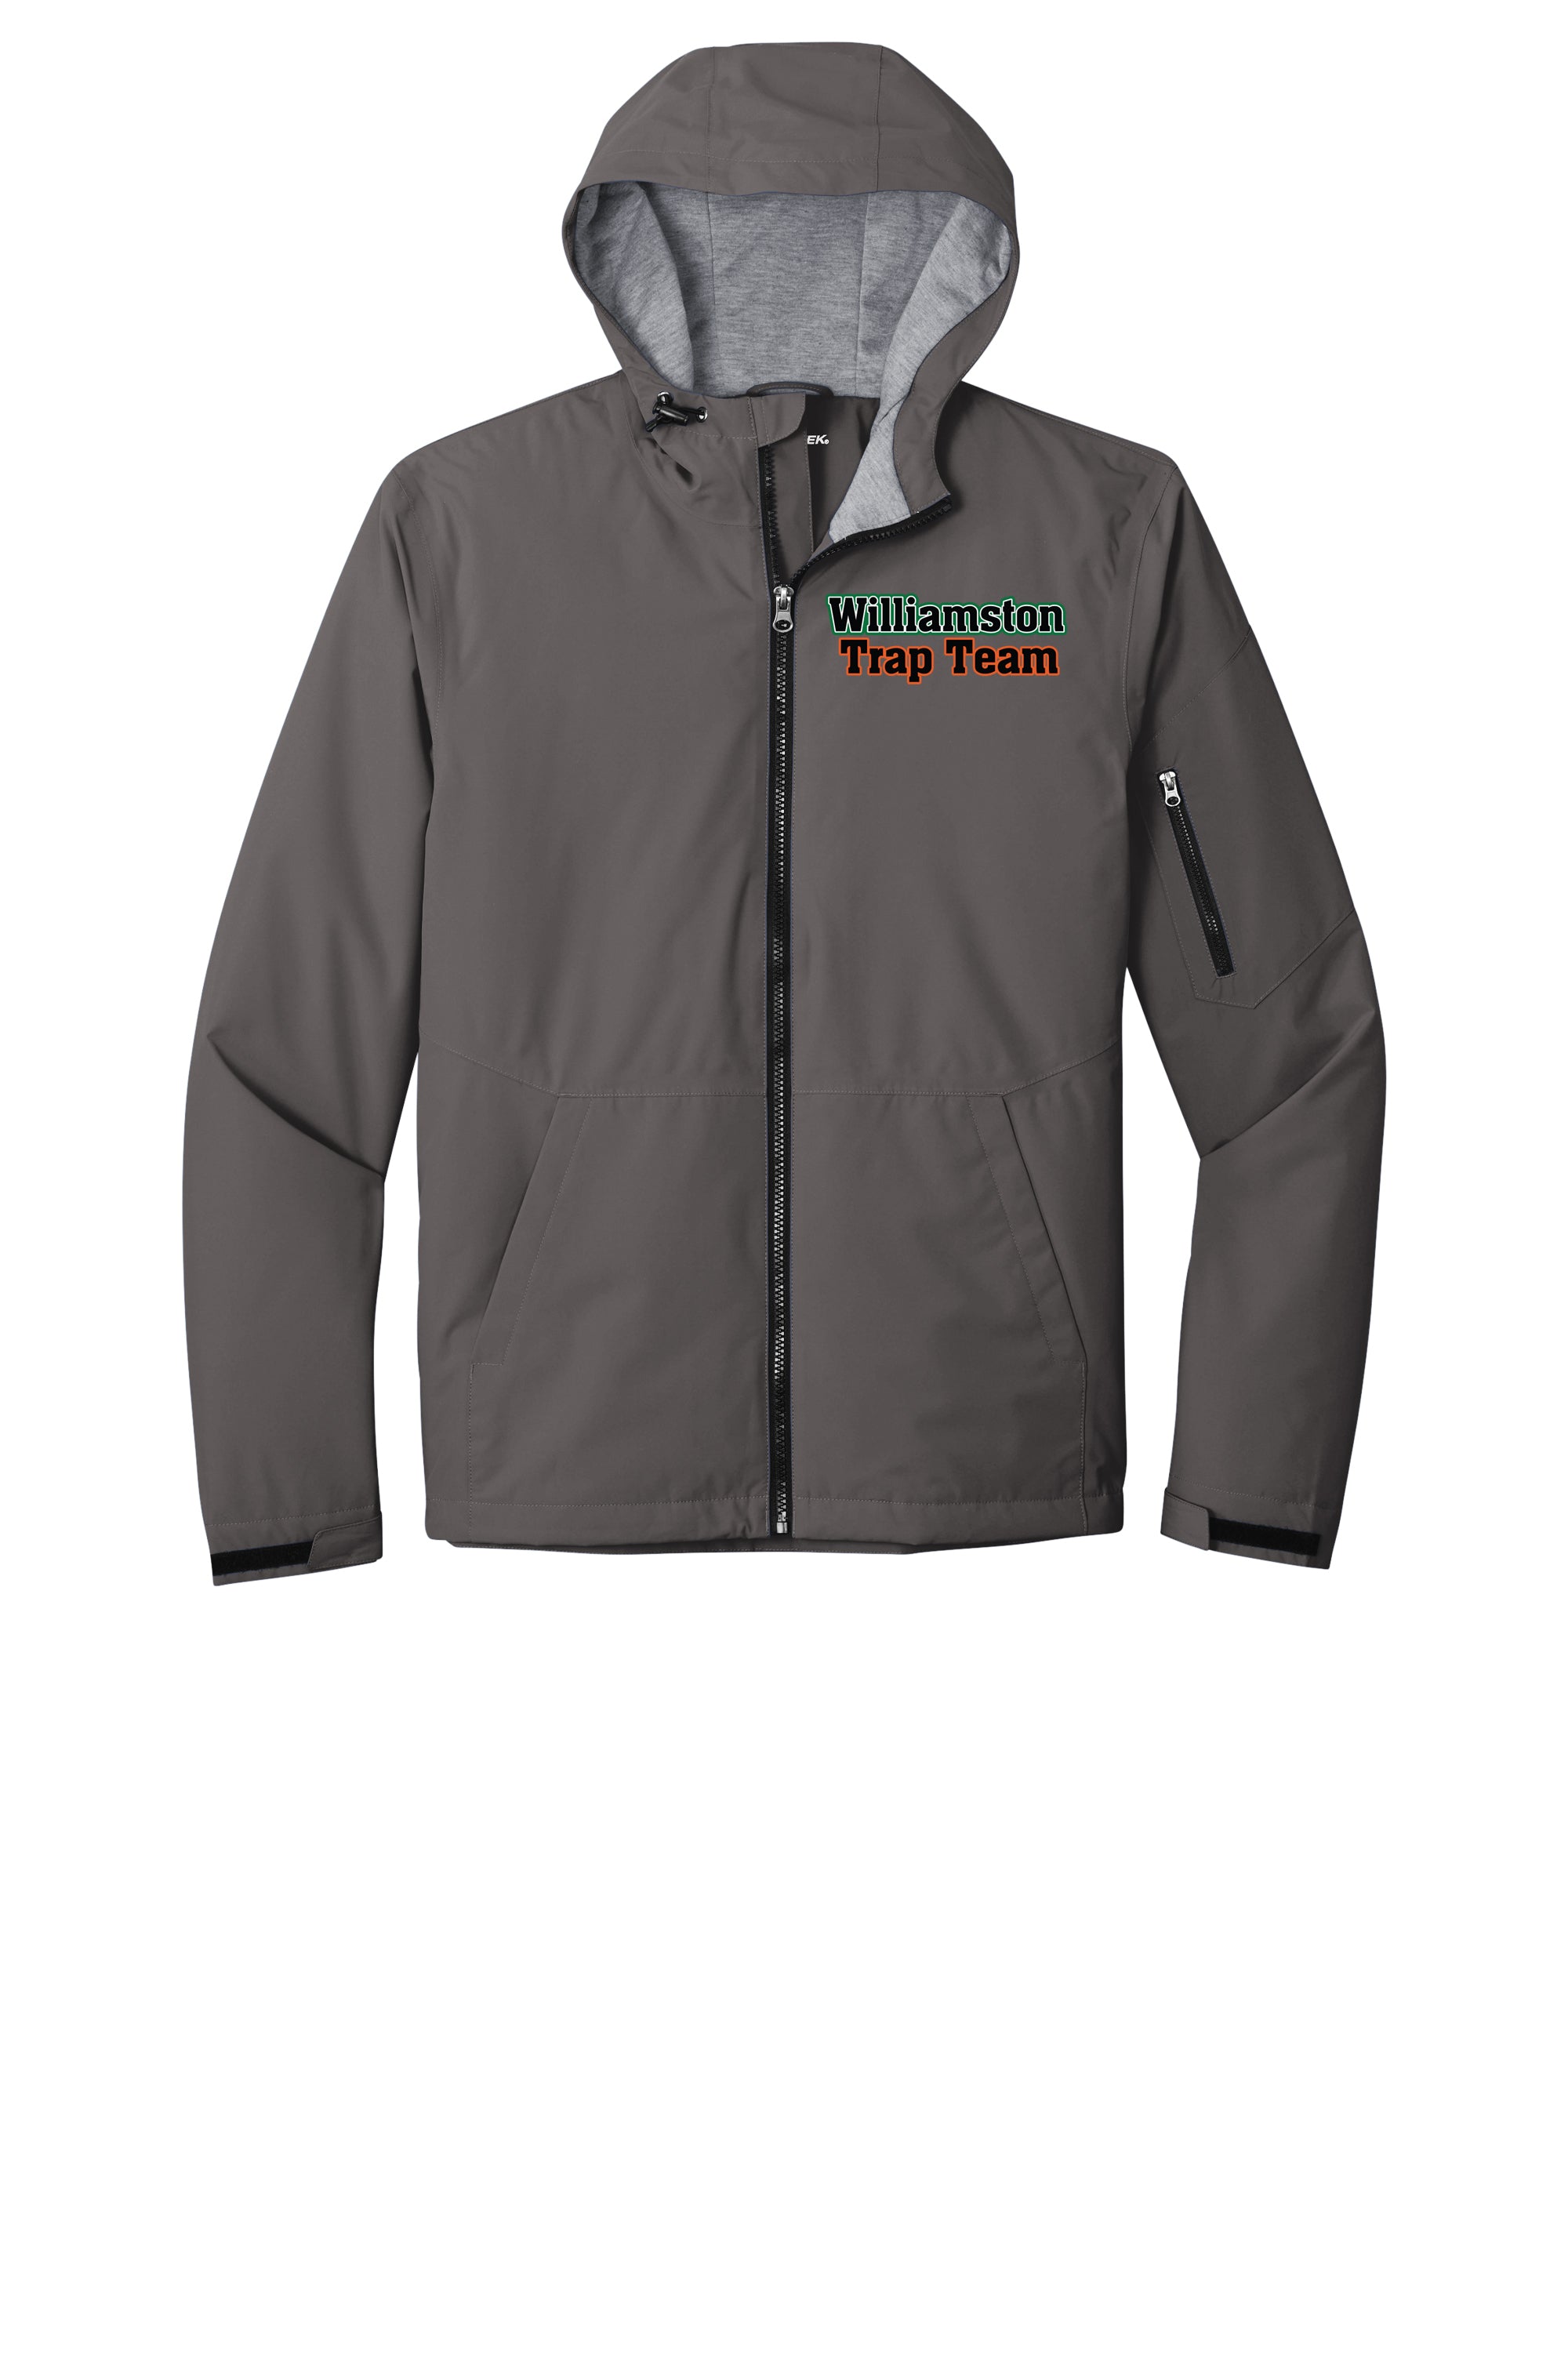 Williamston Trap Team  - Insulated Jackets